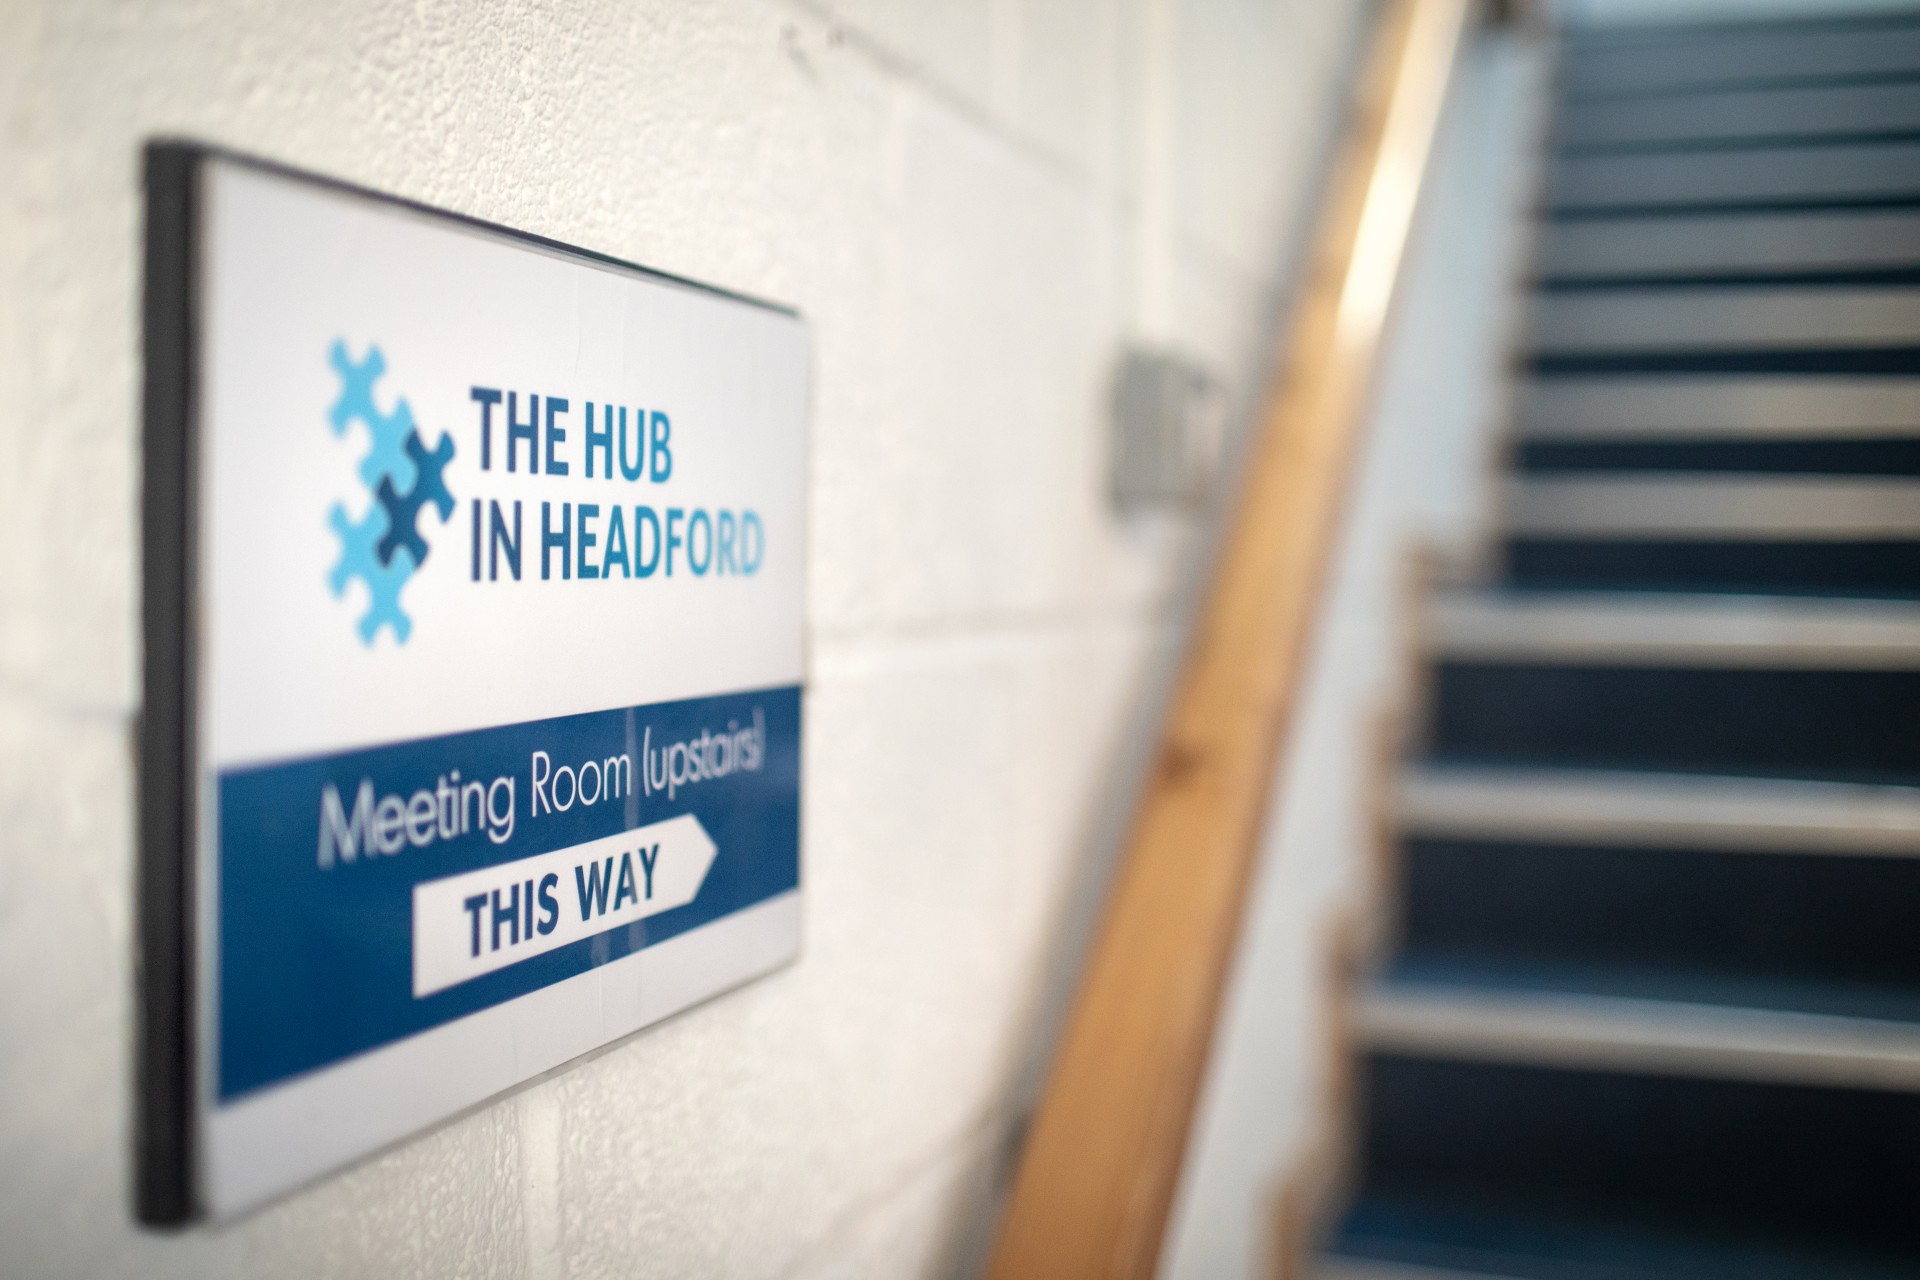 The Hub in Headford